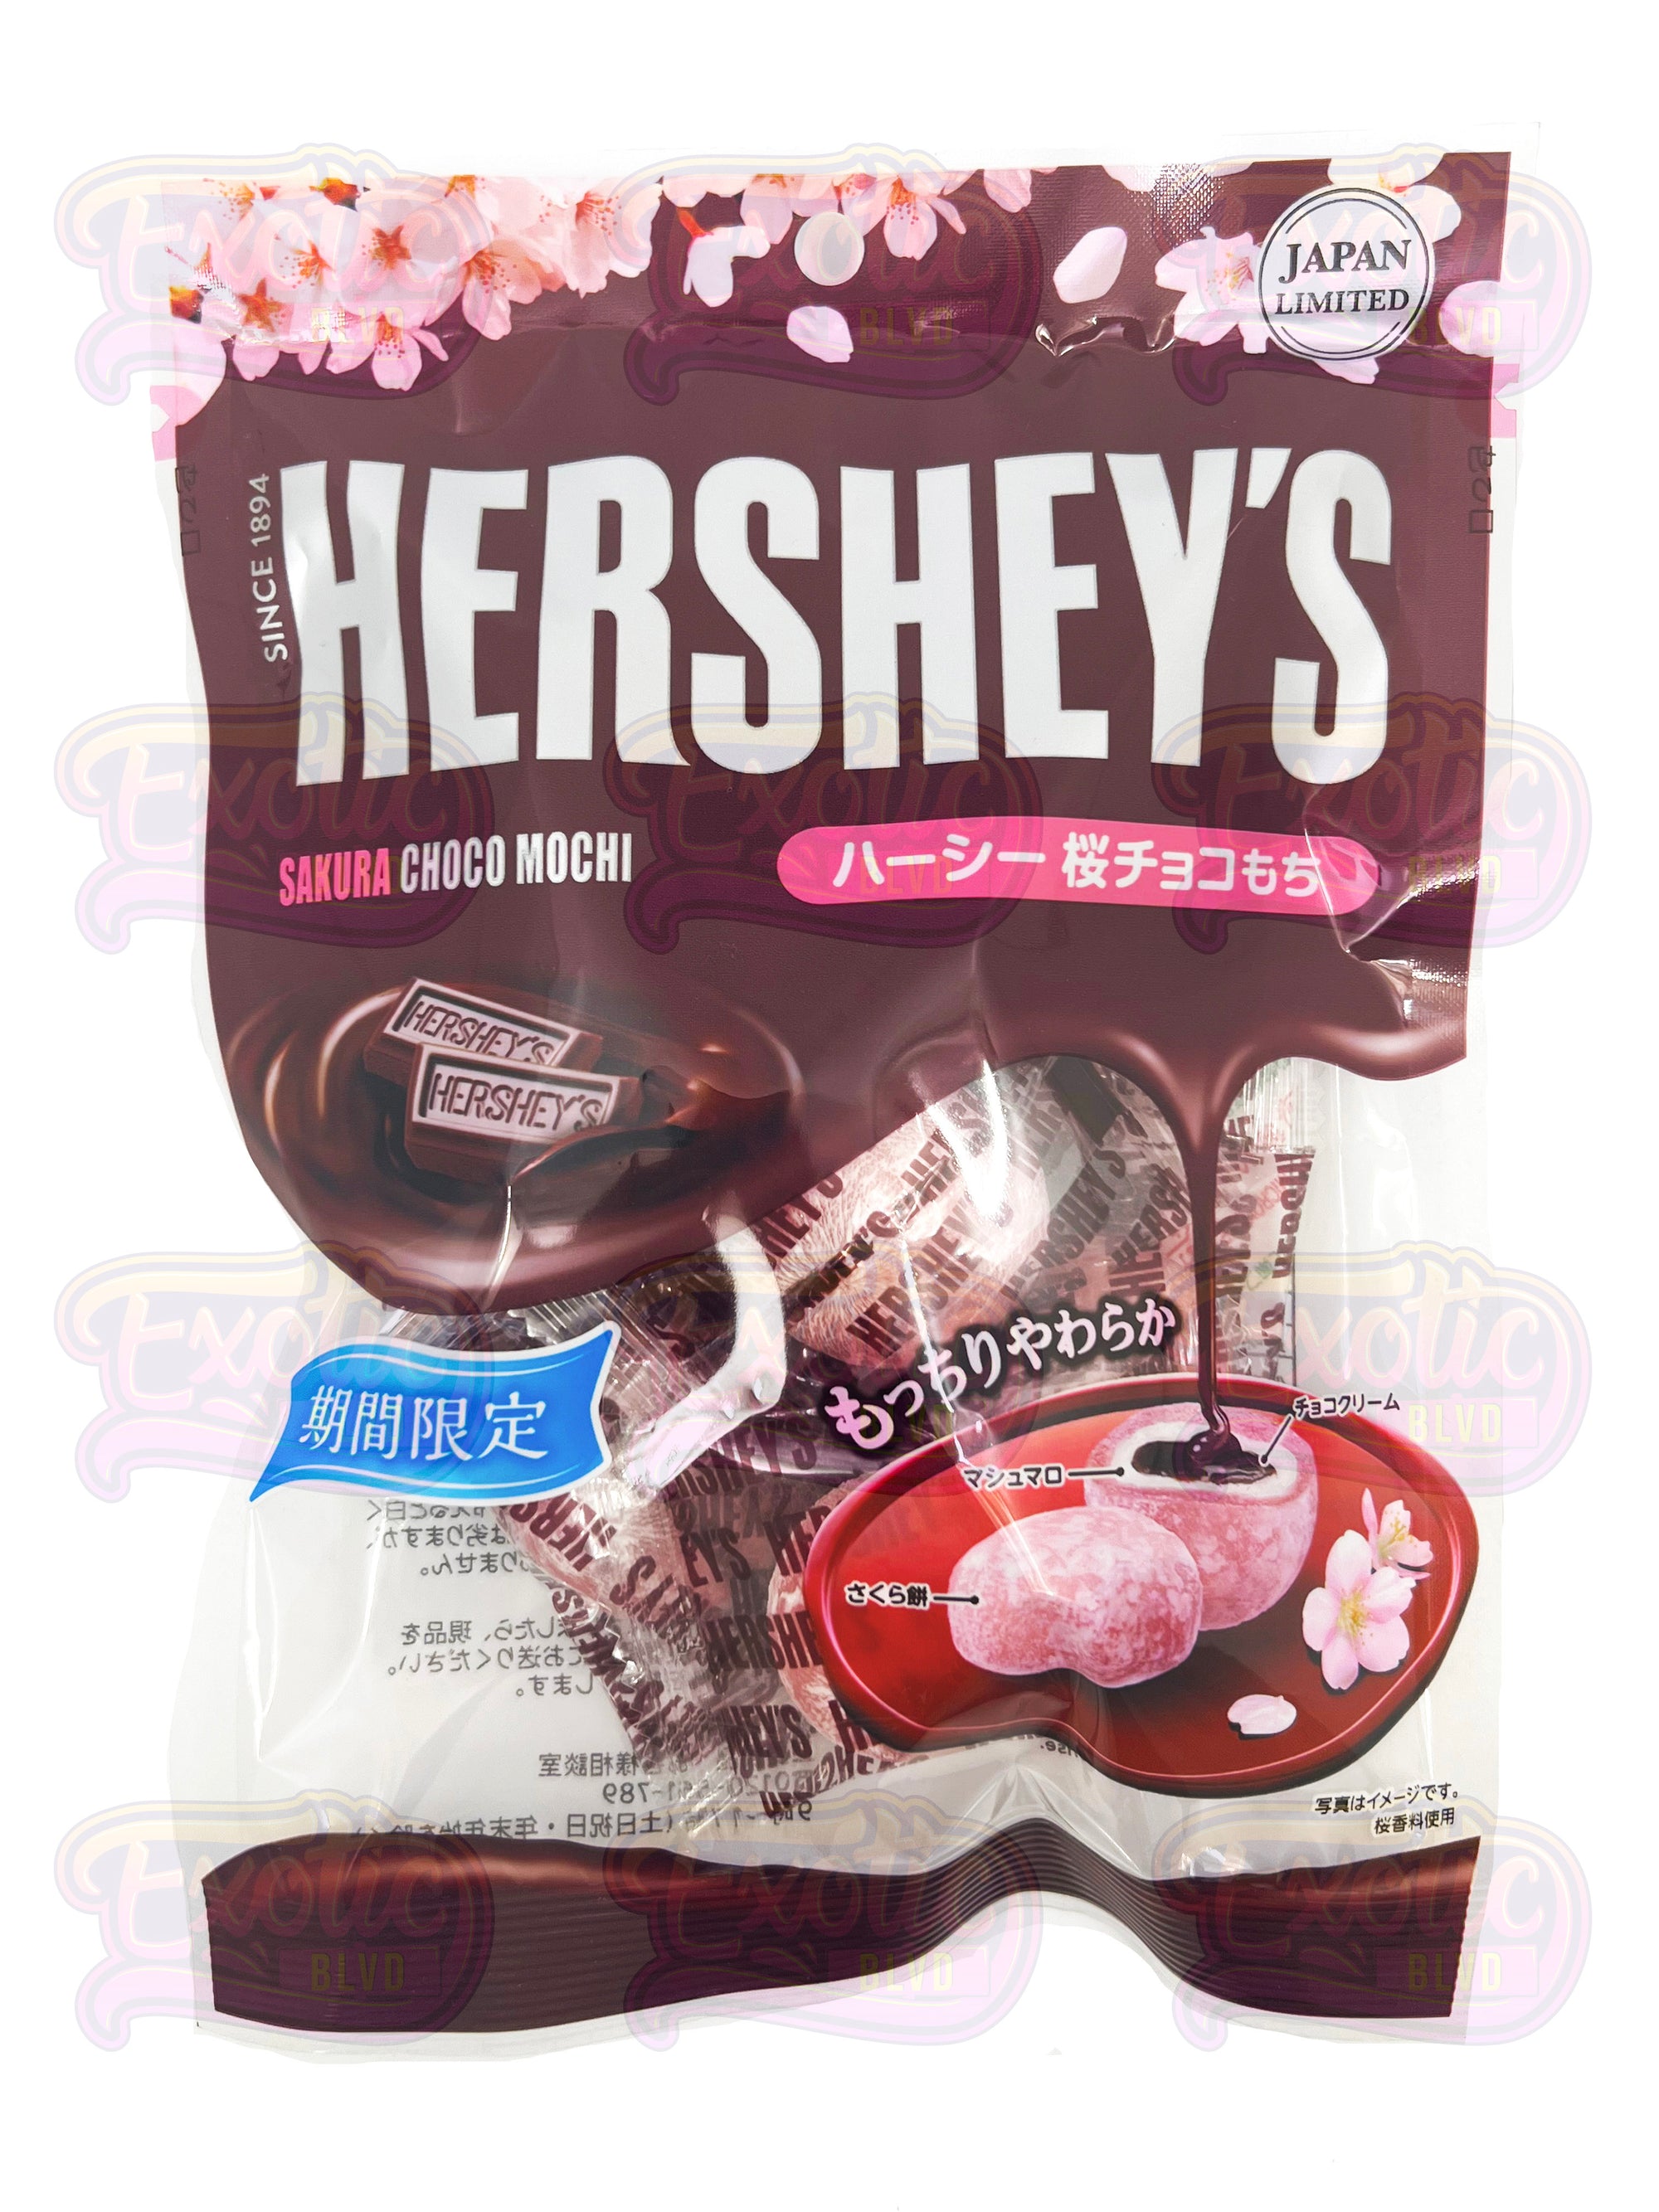 Hershey's Sakura Choco Mochi